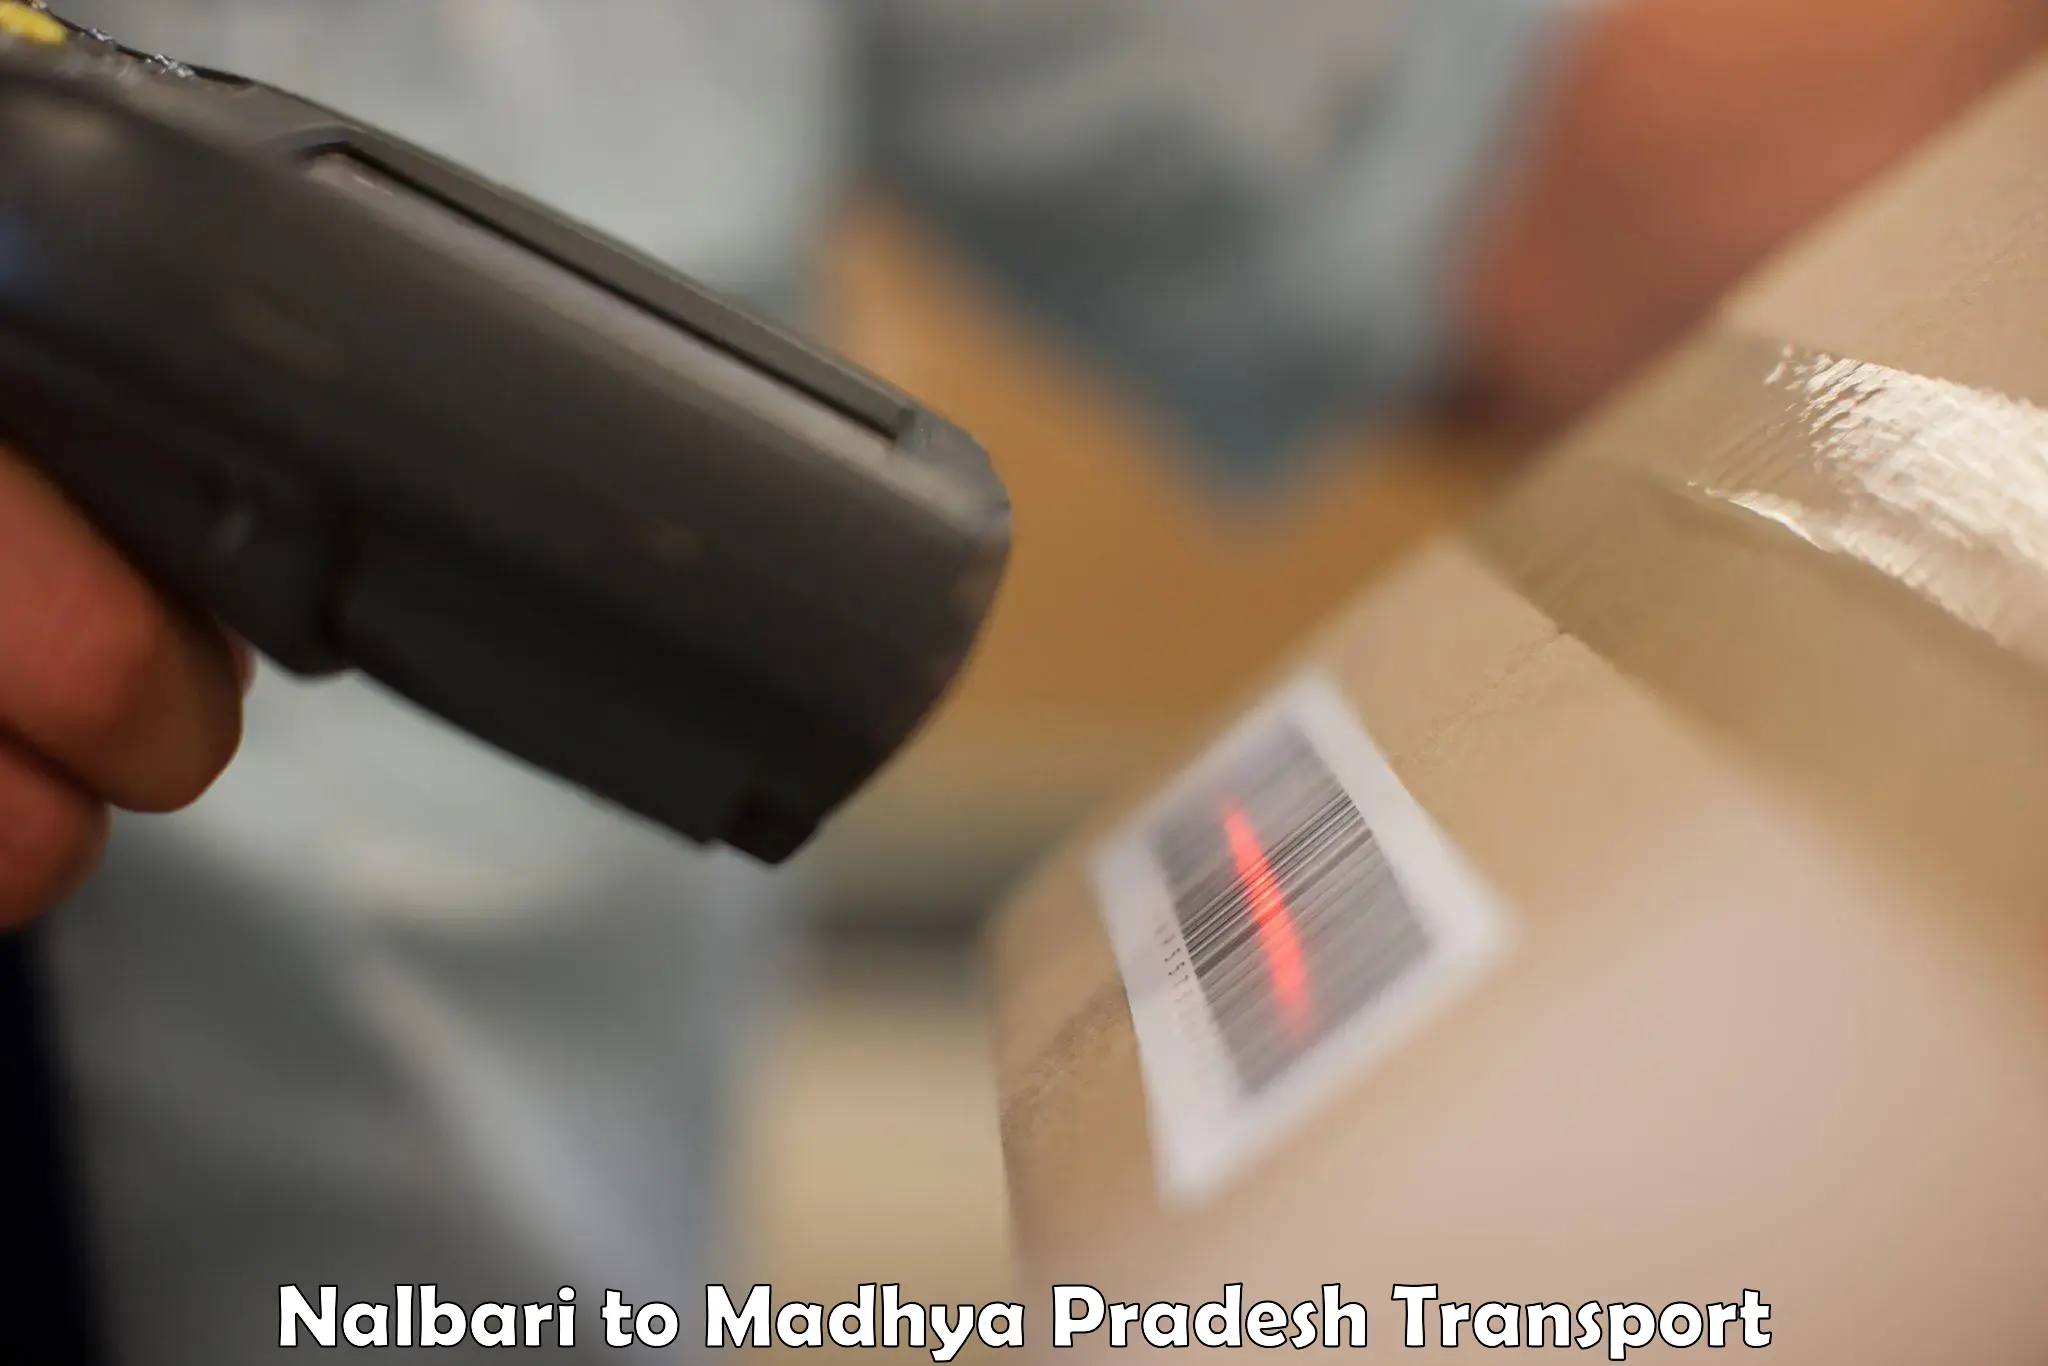 Transport in sharing Nalbari to Amanganj